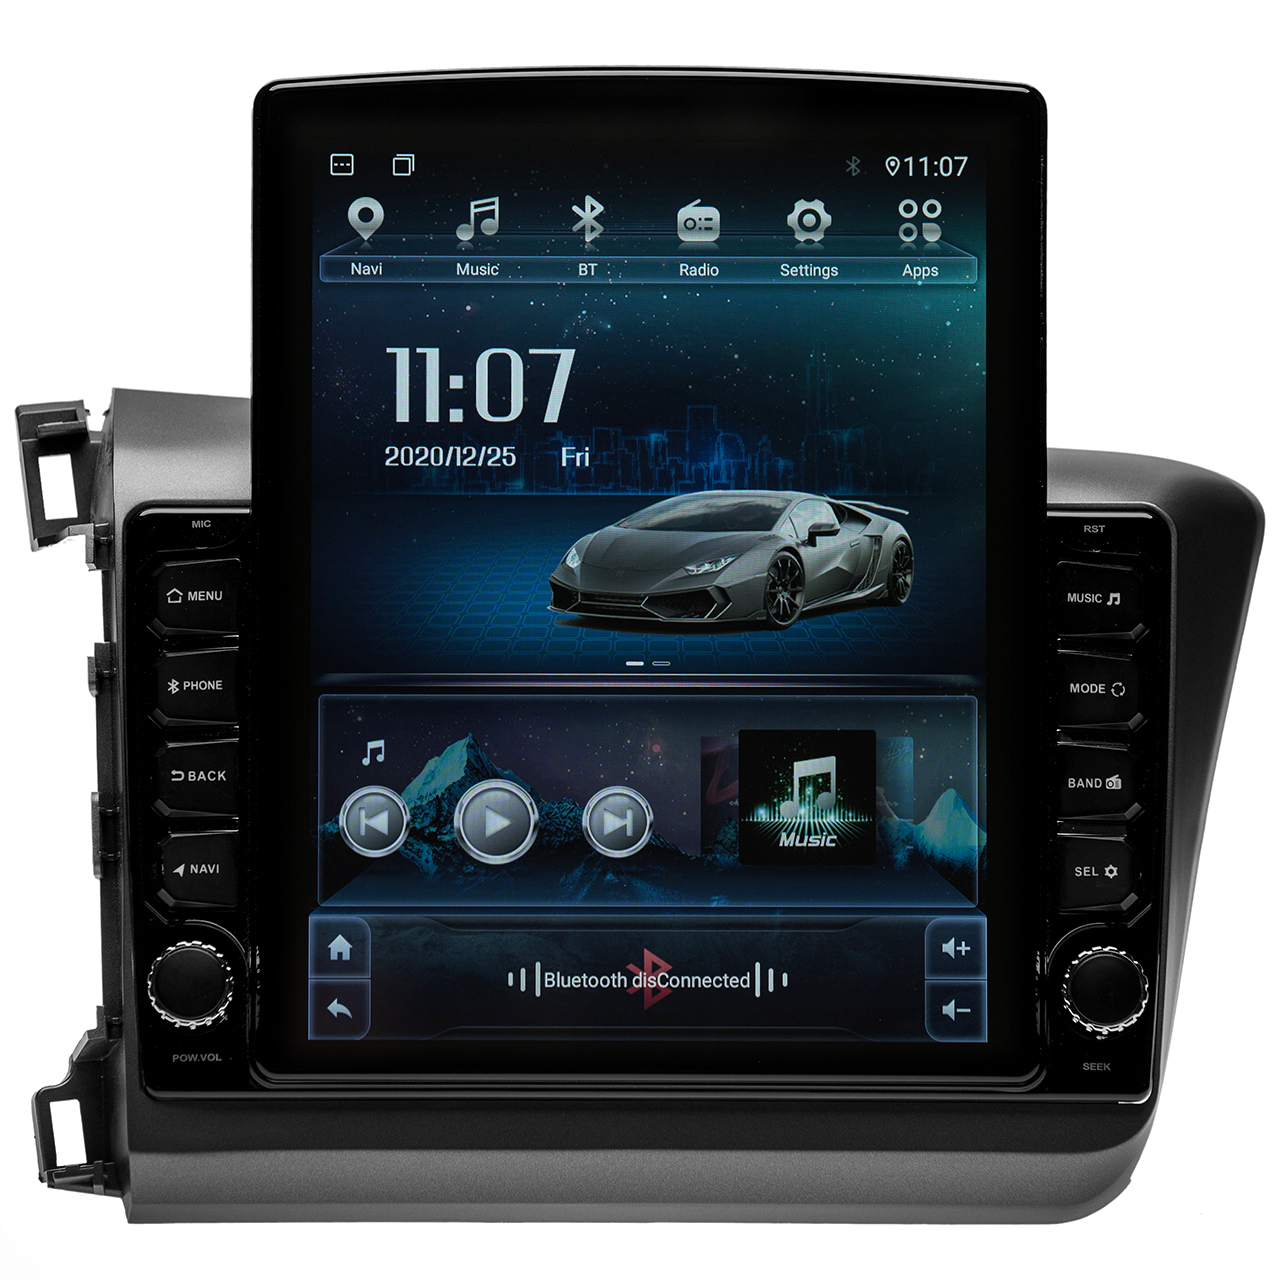 Navigatie AUTONAV ECO Android GPS Dedicata Honda Civic 2011-2016, Model XPERT Memorie 16GB Stocare, 1GB DDR3 RAM, Butoane Si Volum Fizice, Display Vertical Stil Tesla 10